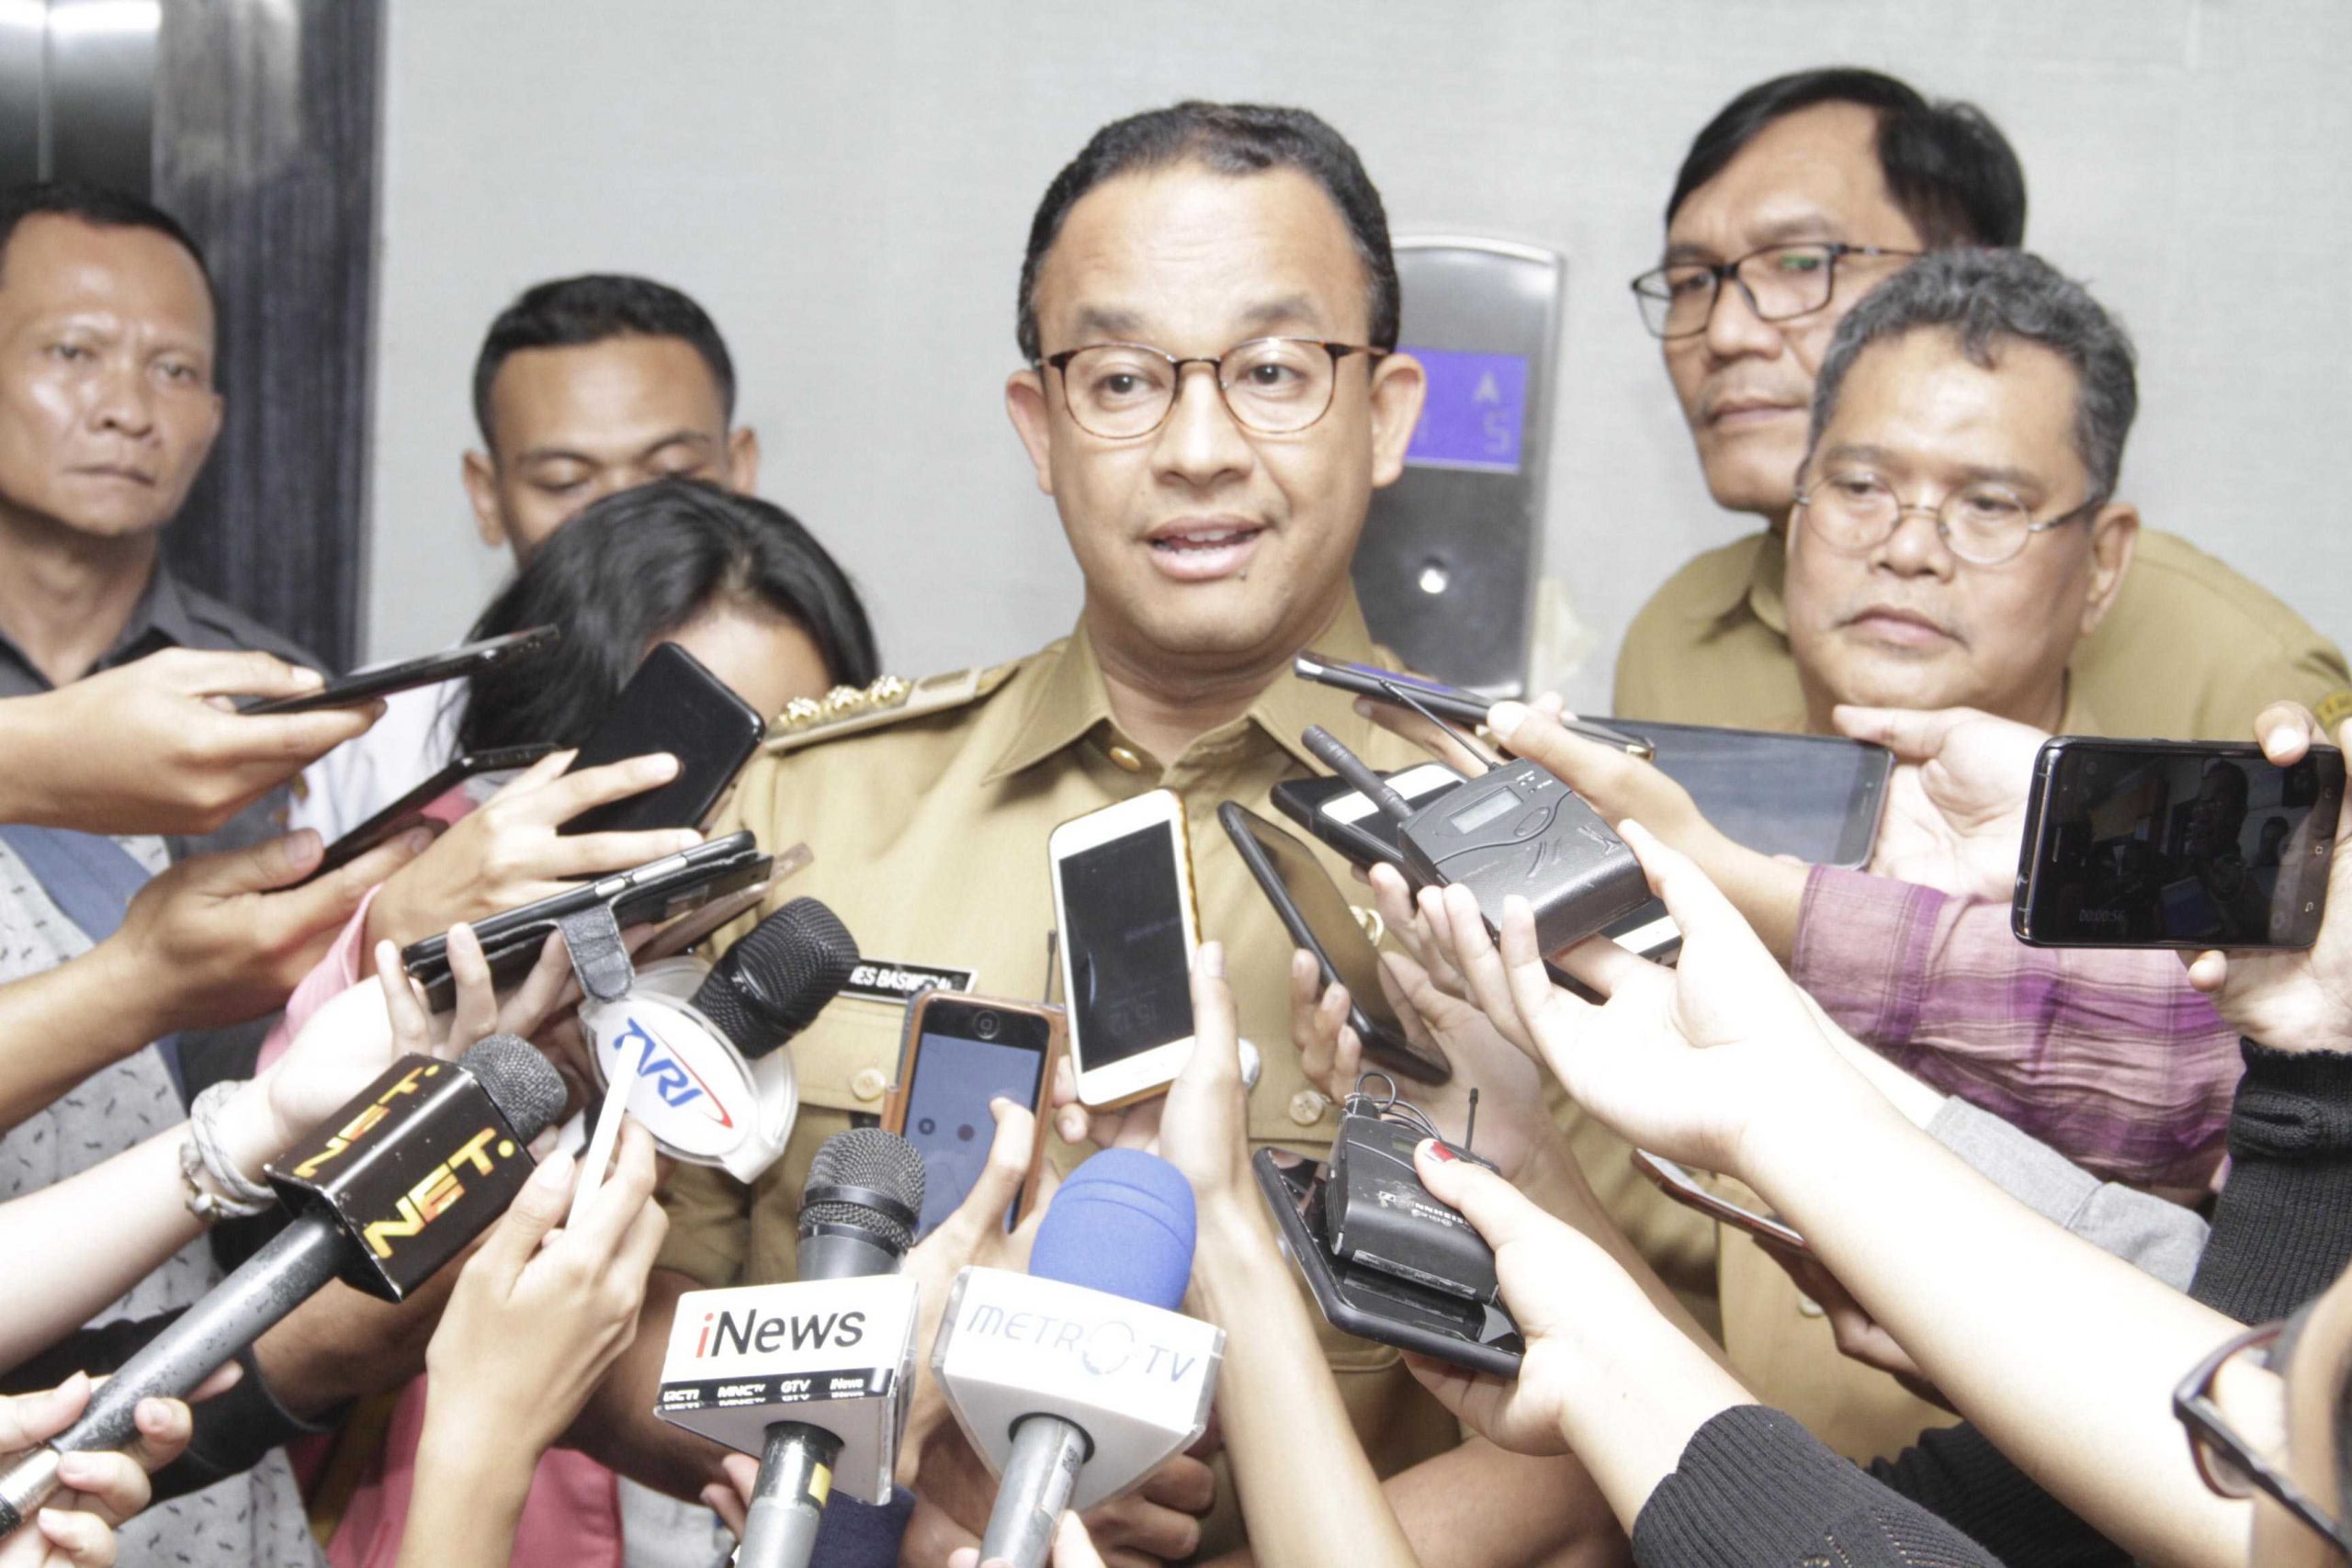 Gubernur DKI Jakarta Dipanggil KPK Terkait Formula E, Anies: Semuanya Menjadi Lebih Jelas